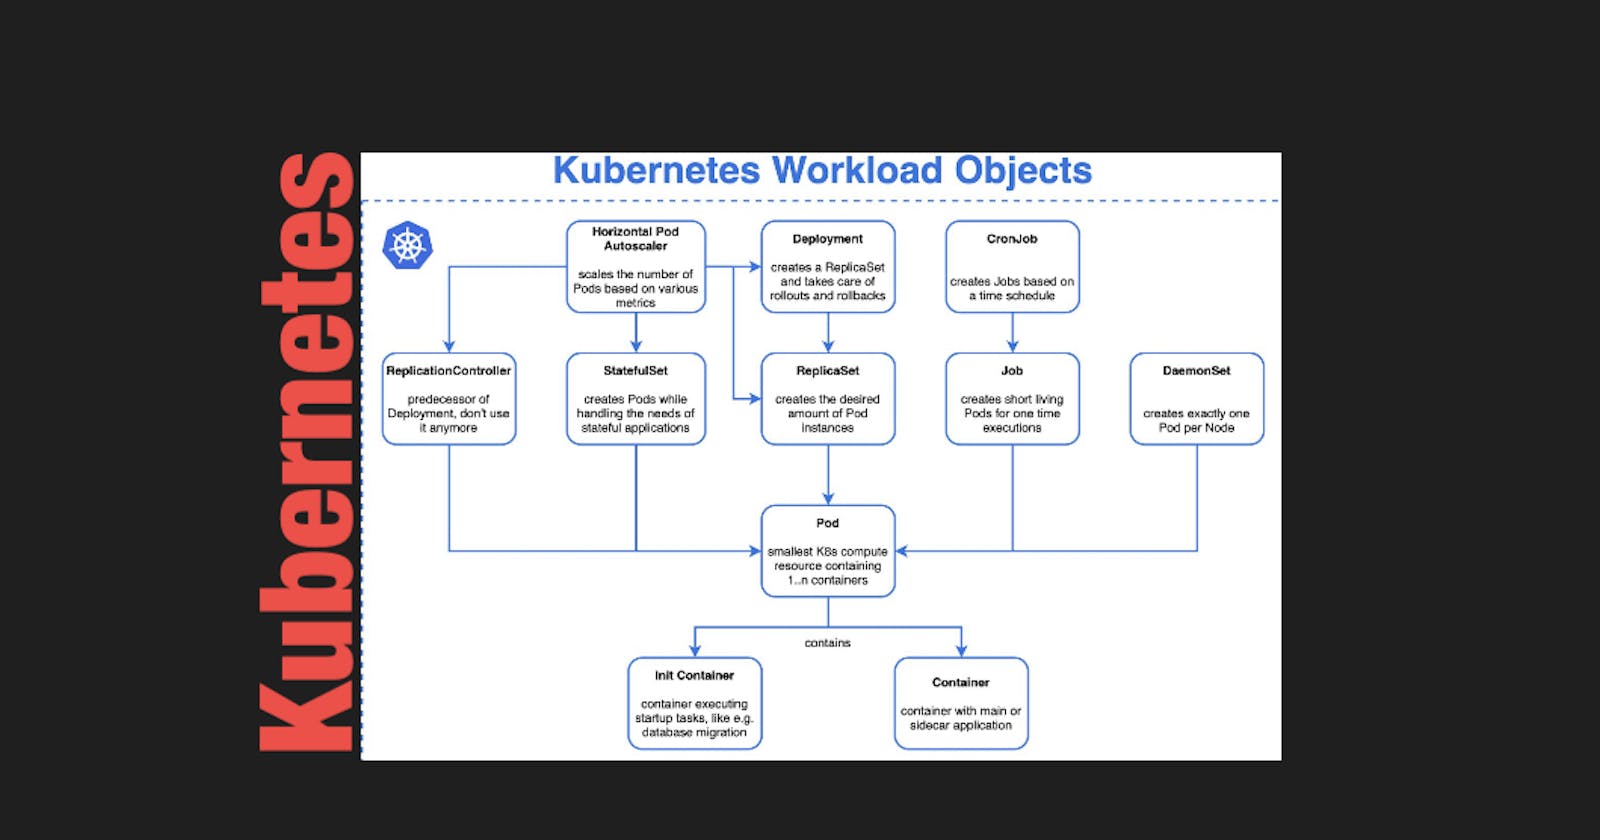 Kubernetes workloads: A Quick Study